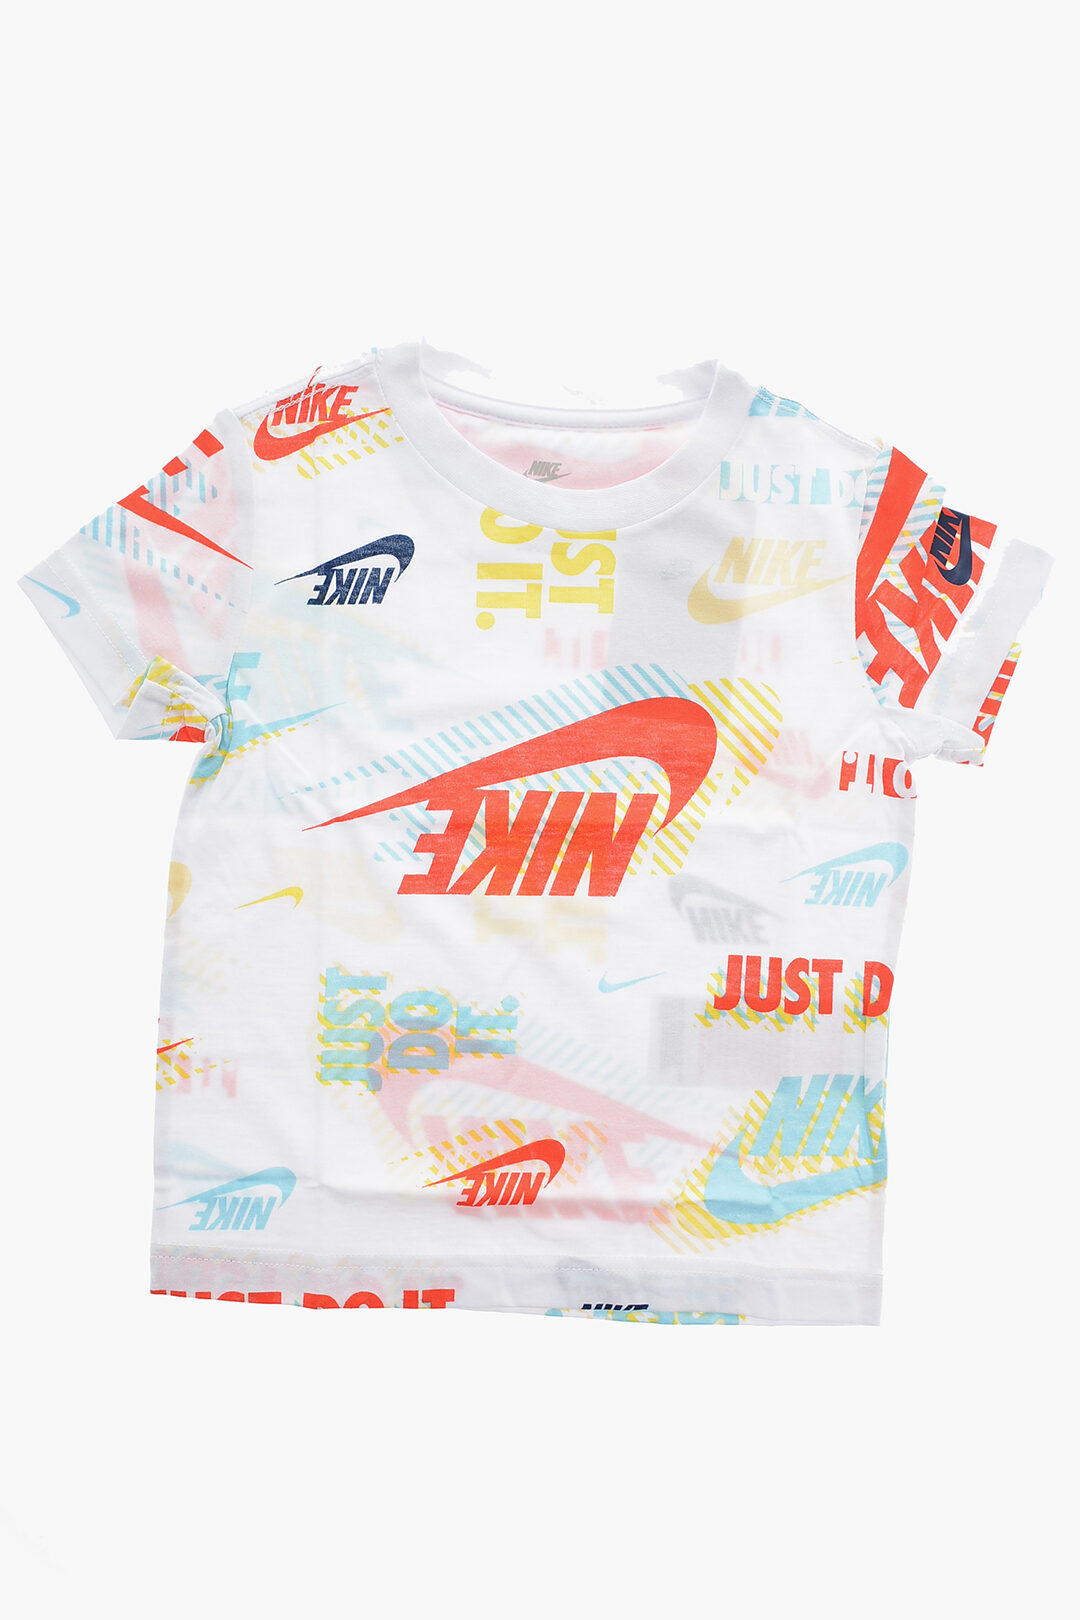 Nike KIDS Printed T-shirt boys - Glamood Outlet